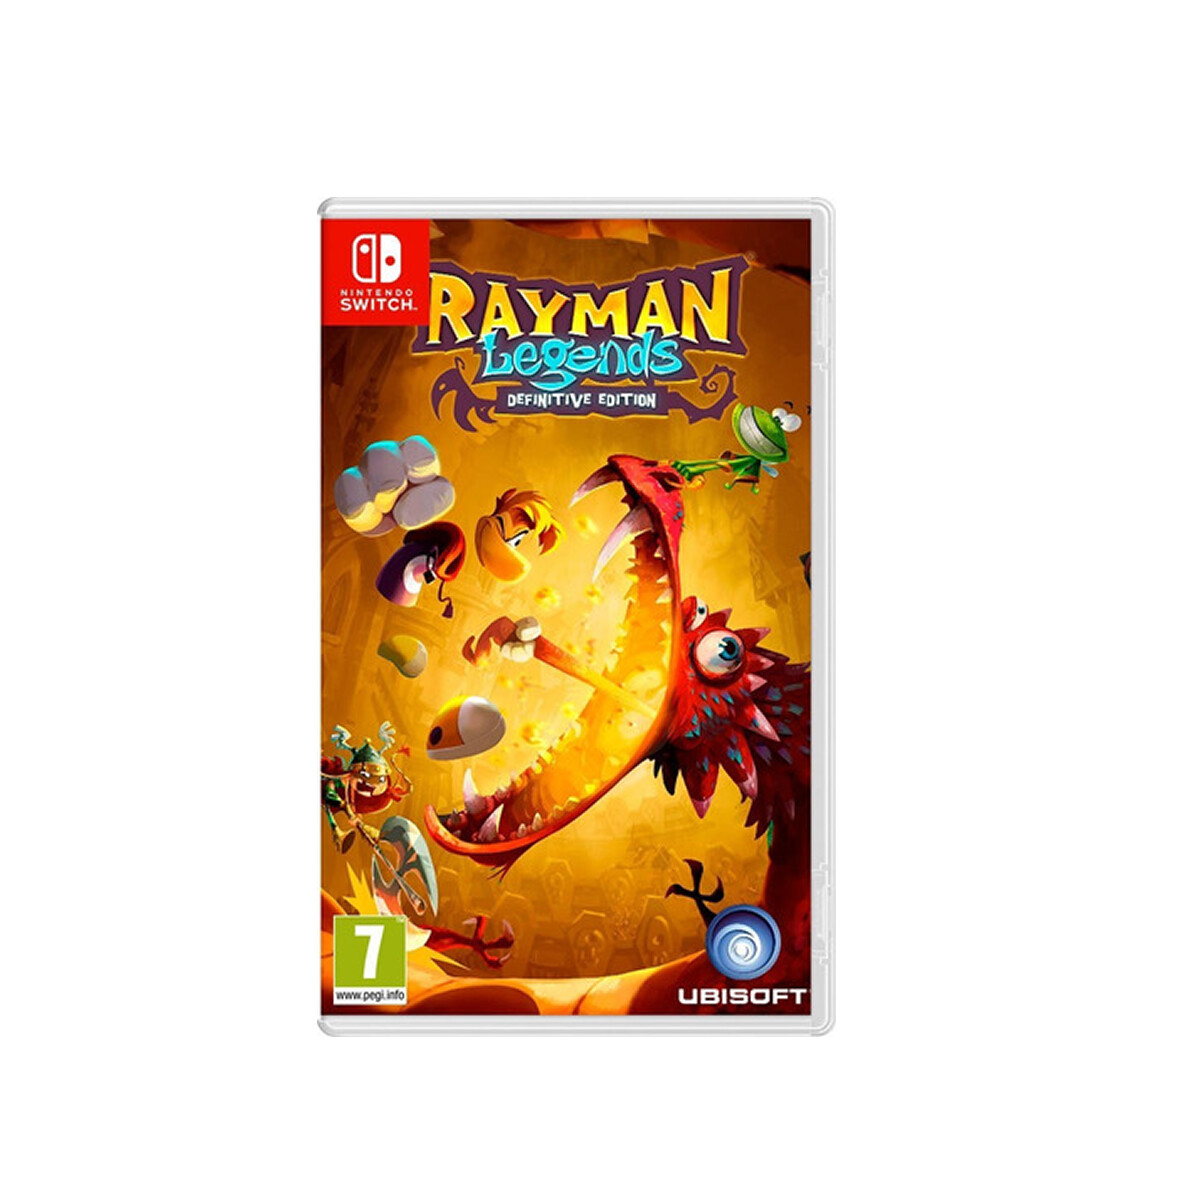 NSW Rayman Legends Definitive Edition 